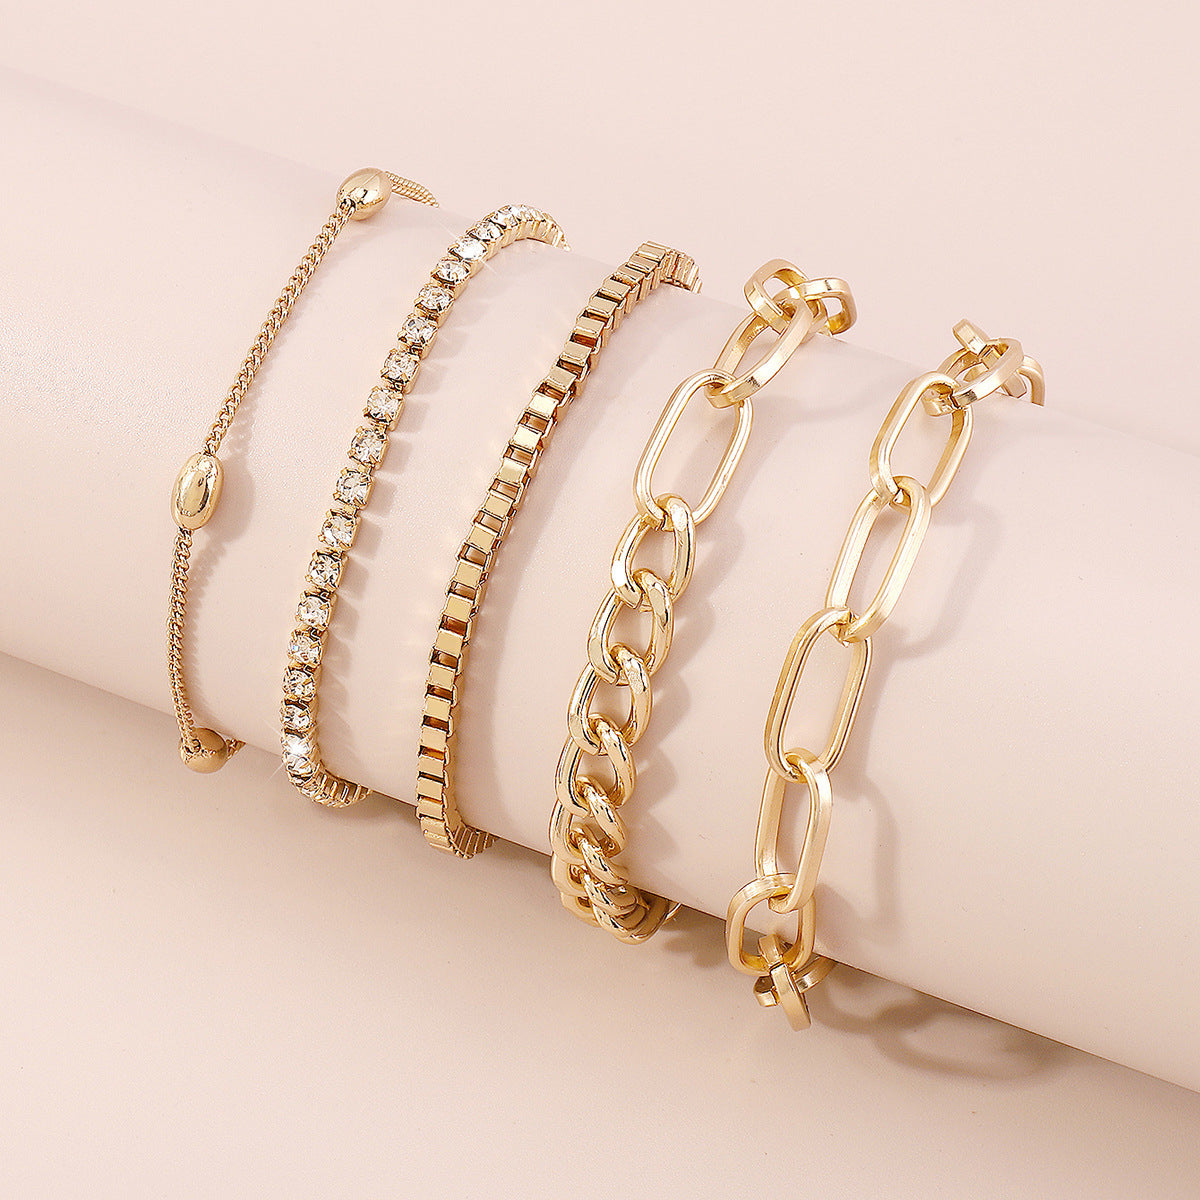 Cubic Zirconia & 18K Gold-Plated Tennis Cable Chain Bracelet Set